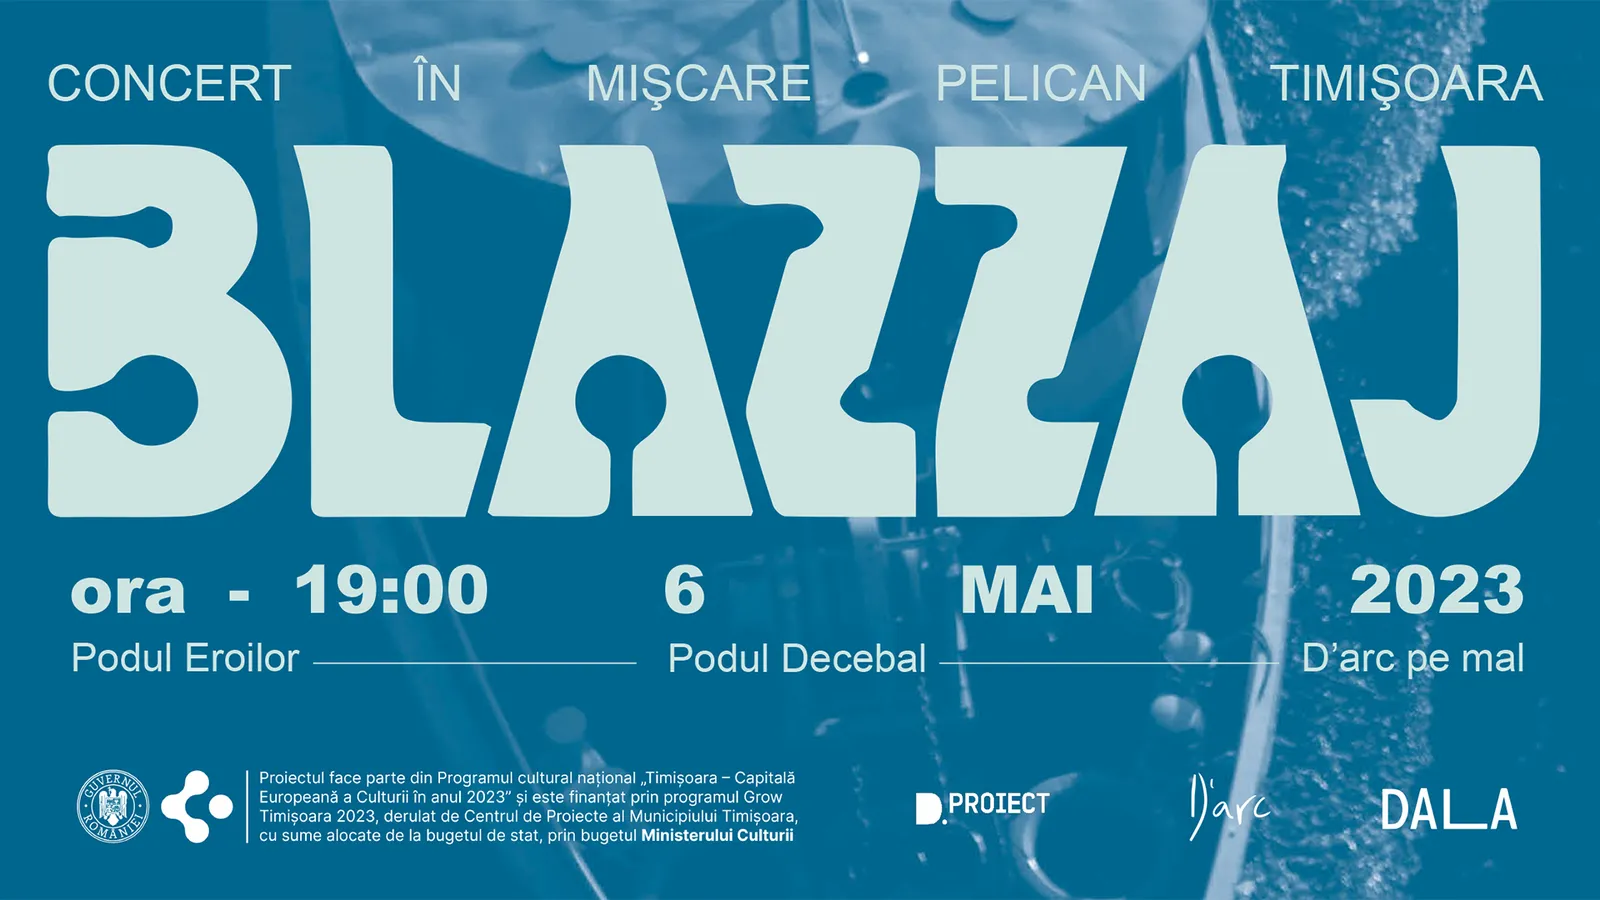 Concert BLAZZAJ - Ecluze pe Bega 2023